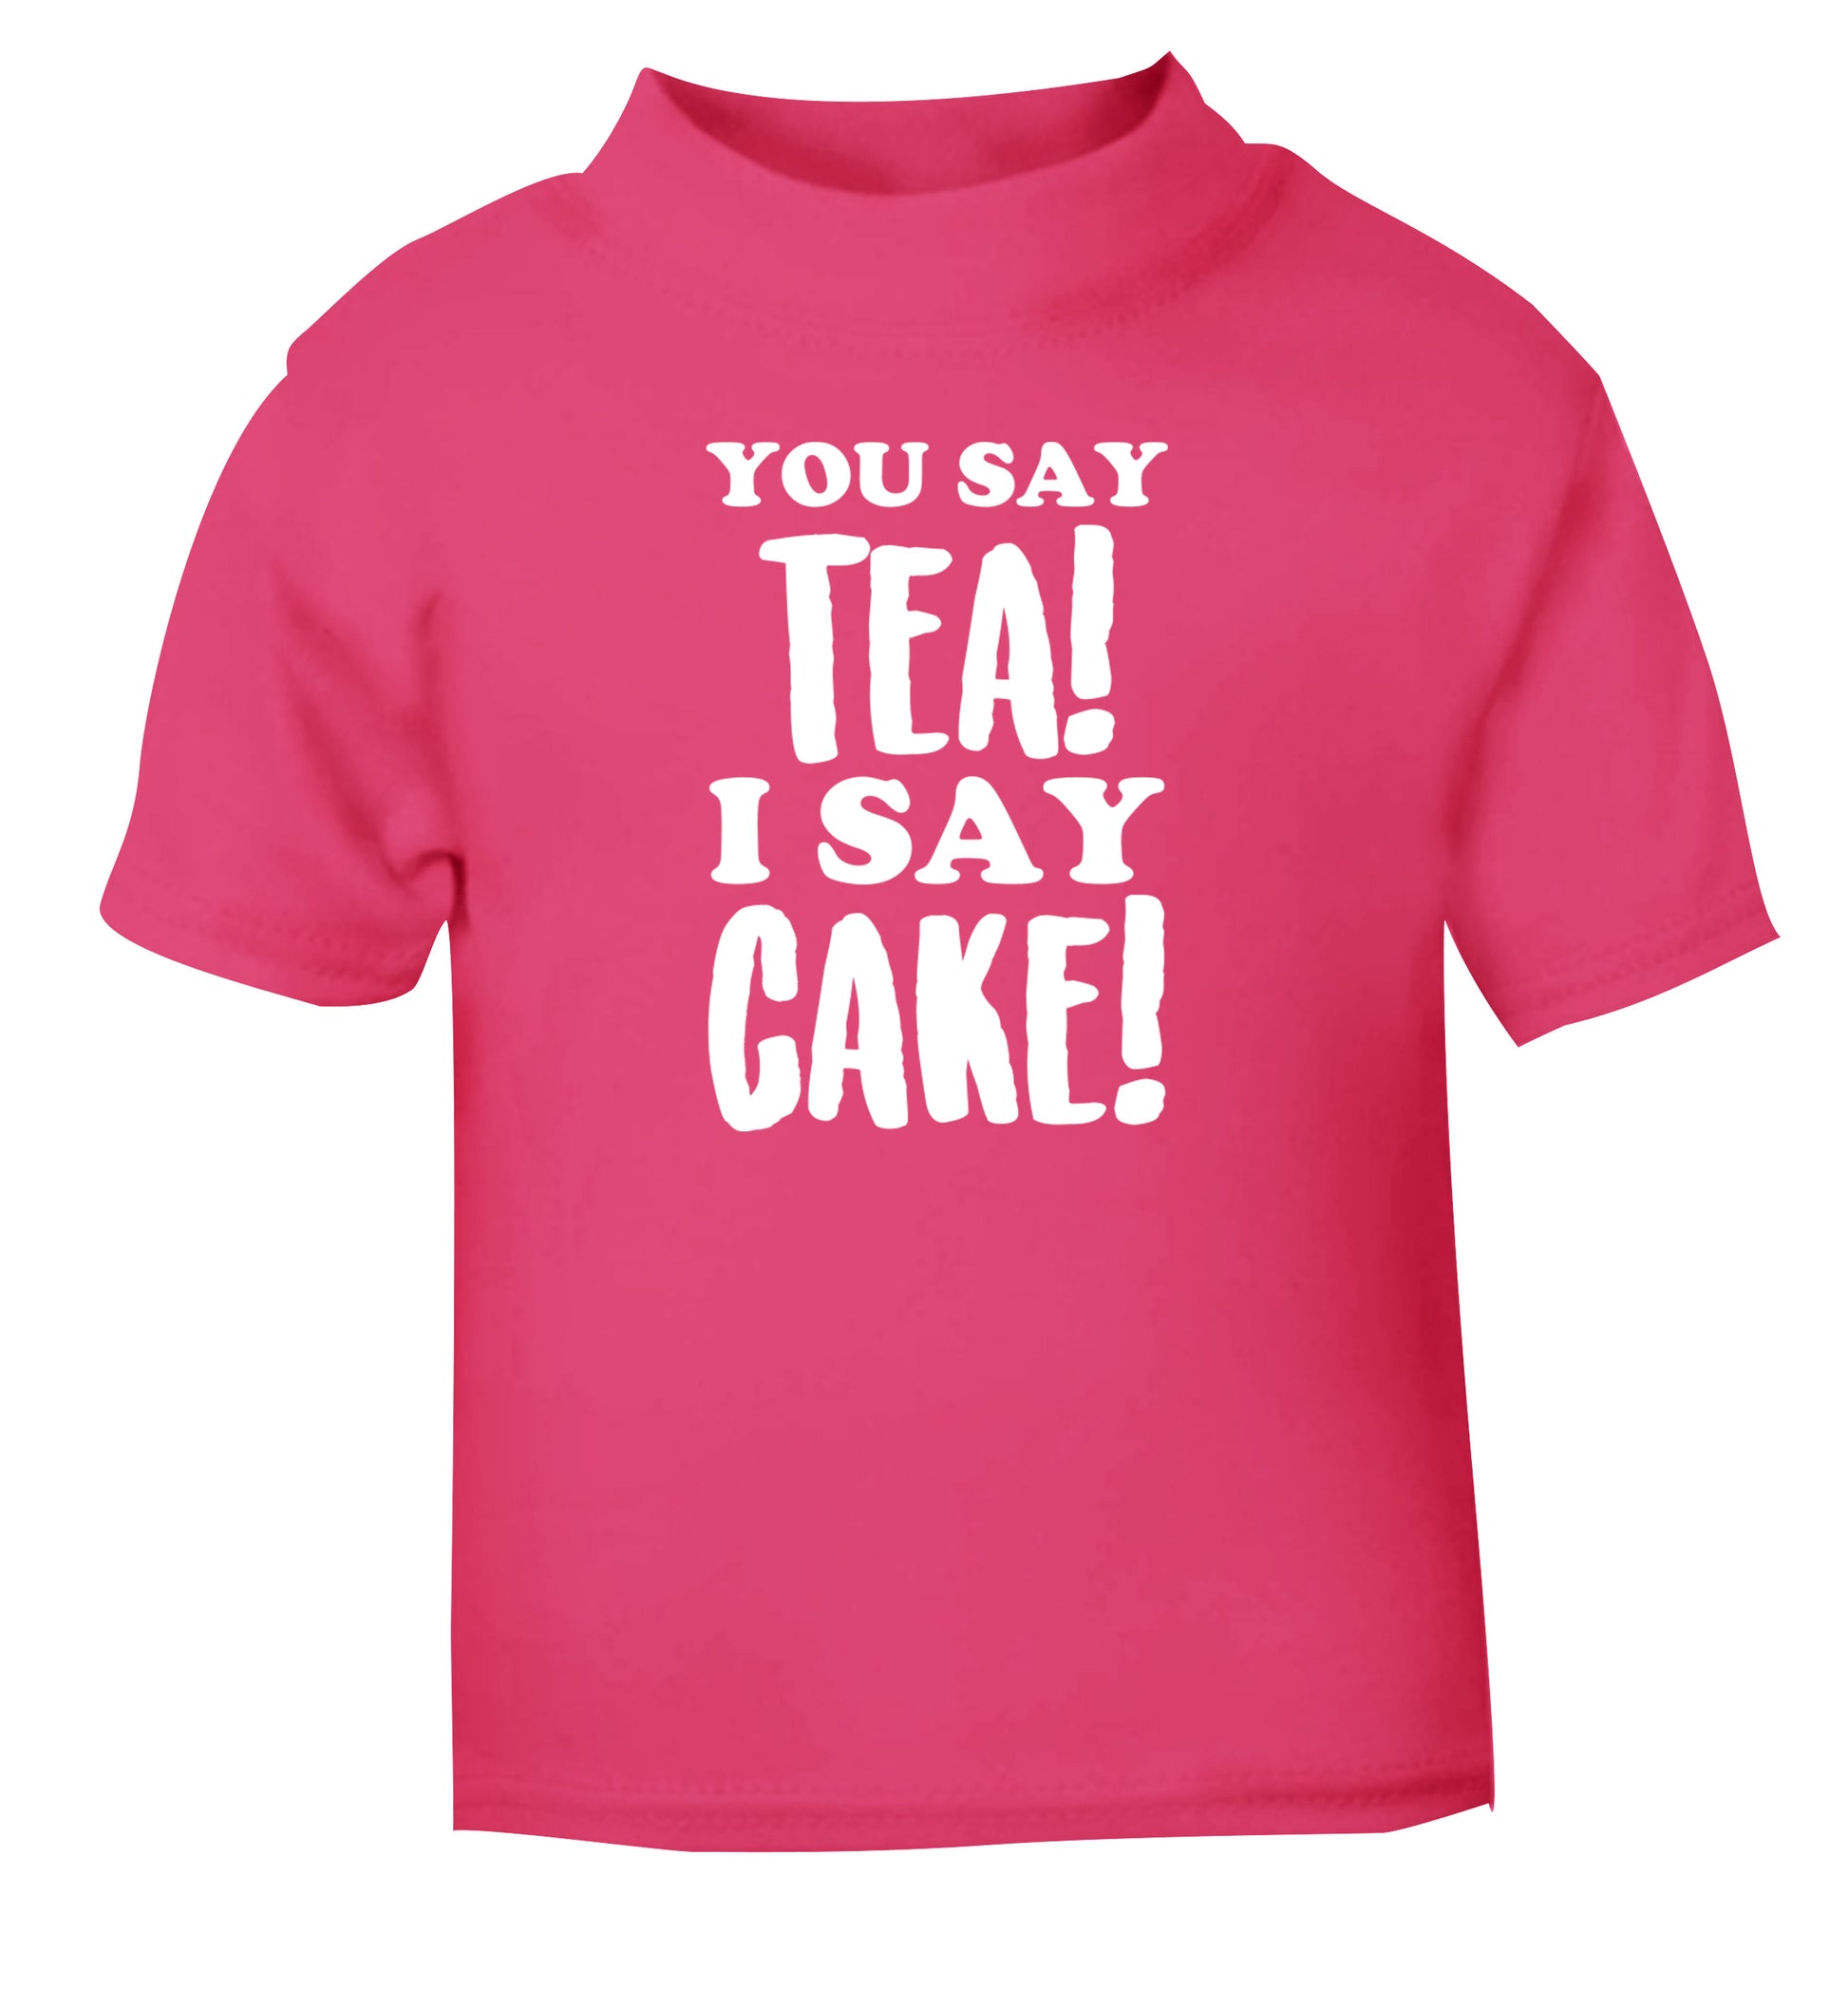 You say tea I say cake! pink Baby Toddler Tshirt 2 Years